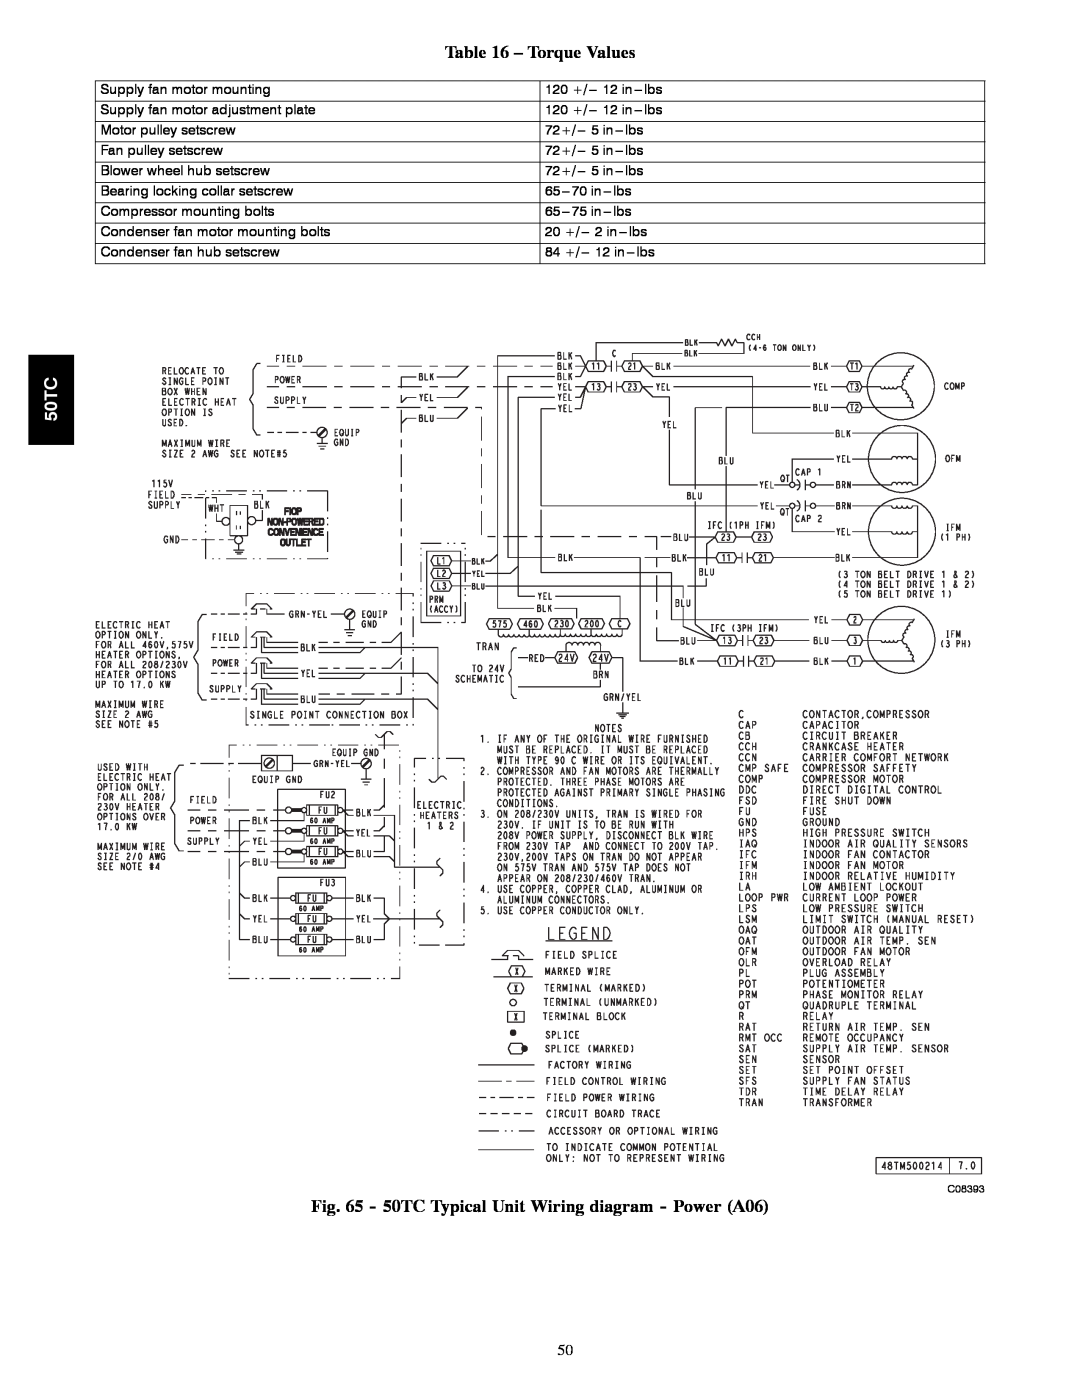 Carrier 50TCA04-A07 appendix Torque Values, 50TC Typical Unit Wiring diagram - Power A06, 20 +, 84 + 